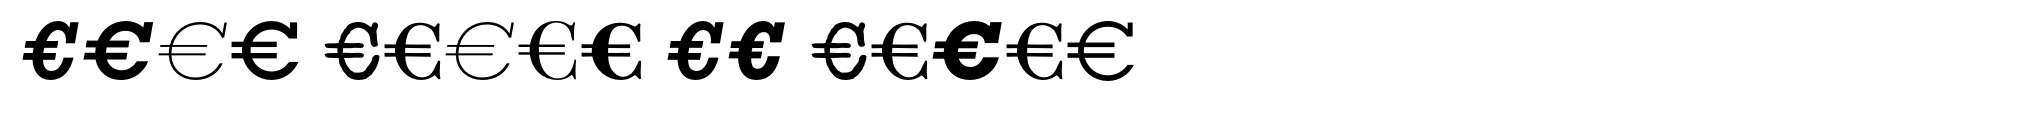 Euro Serif EF Seven image